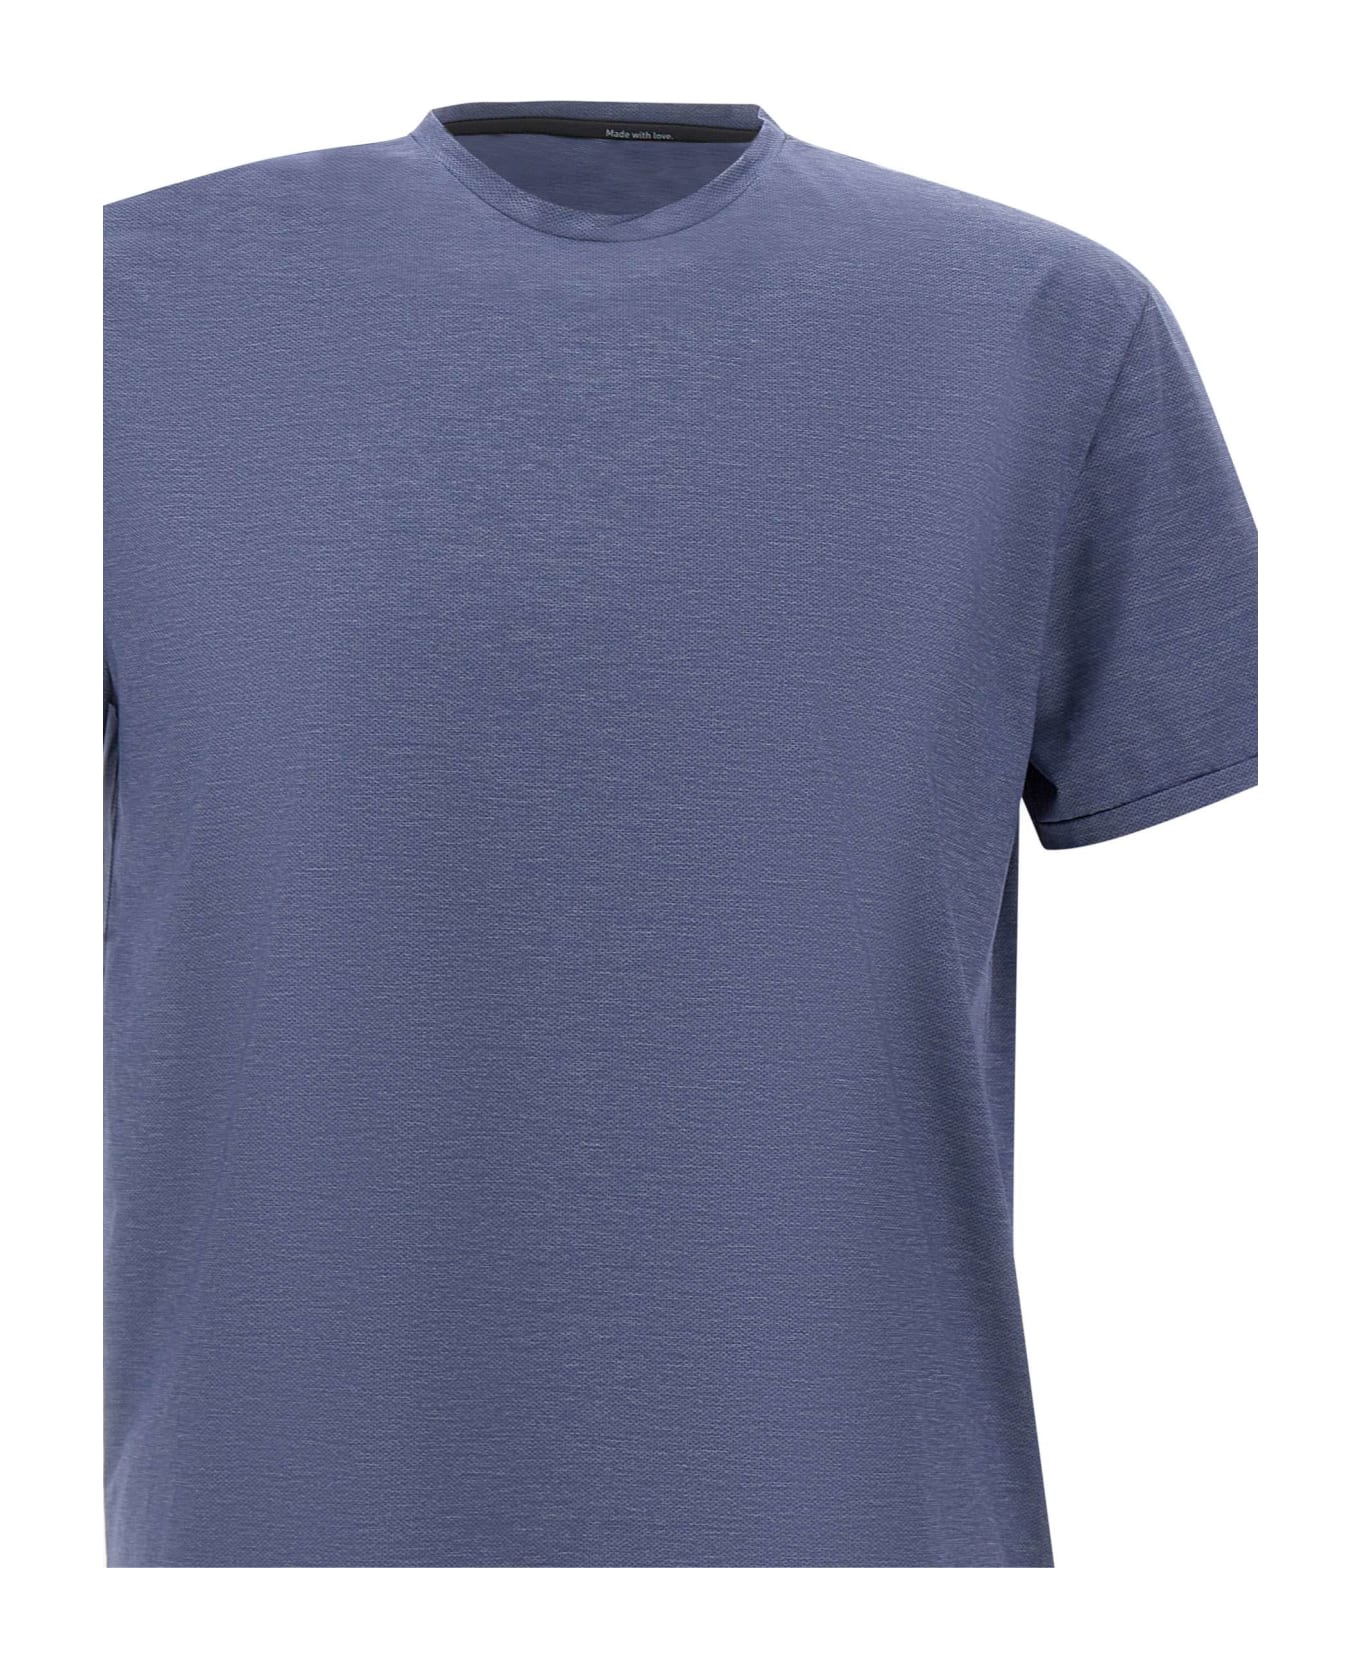 RRD - Roberto Ricci Design "summer Smart" T-shirt Fine Oxford Fabric - BLUE